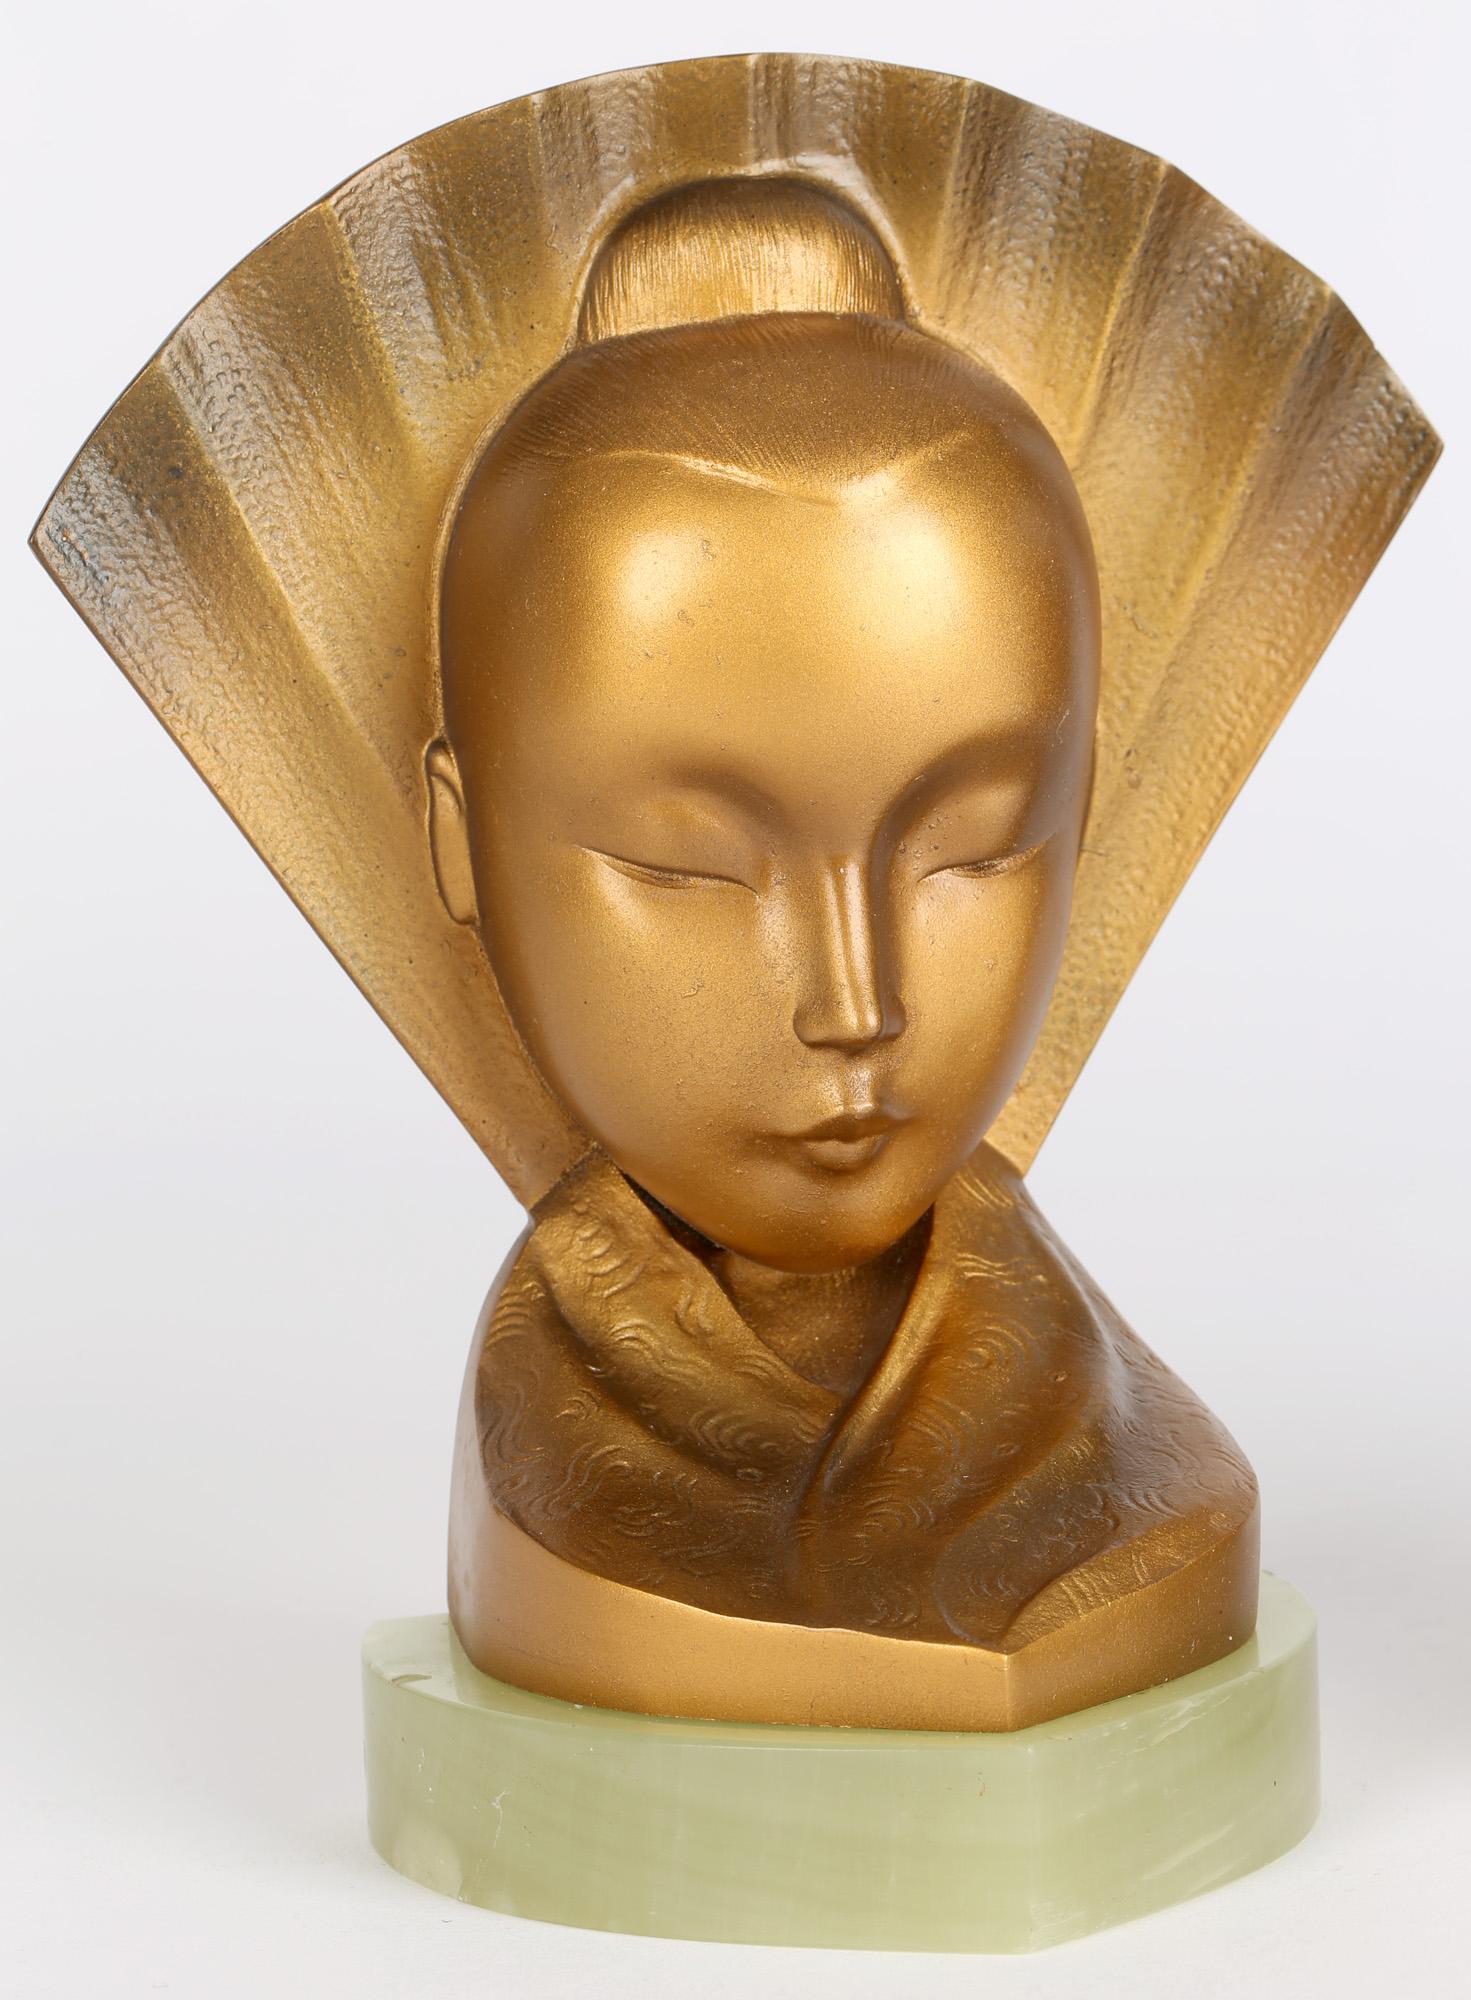 Aubör Austrian Art Deco Geisha Girl and Fan Bronze Bookends For Sale 5